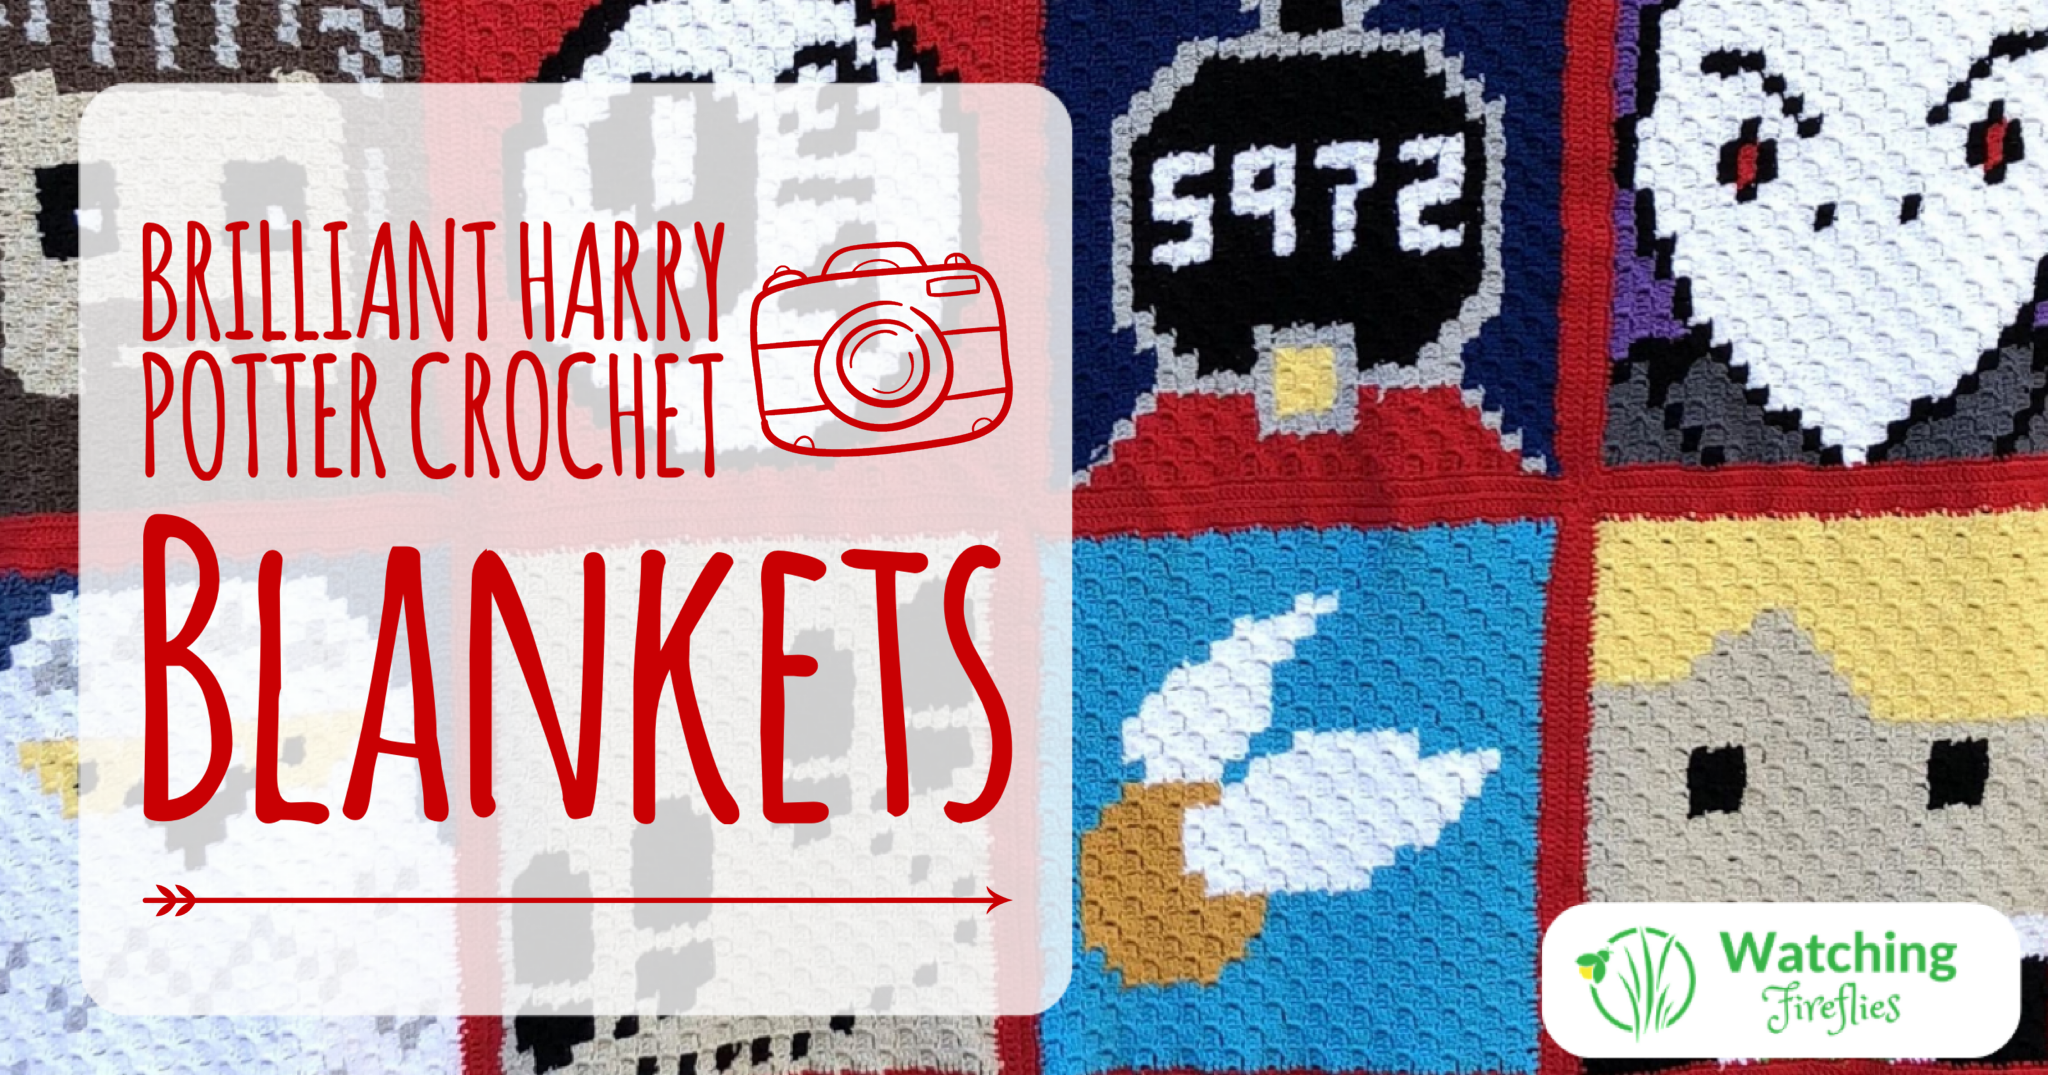 Brilliant Harry Pottery Crochet Blankets